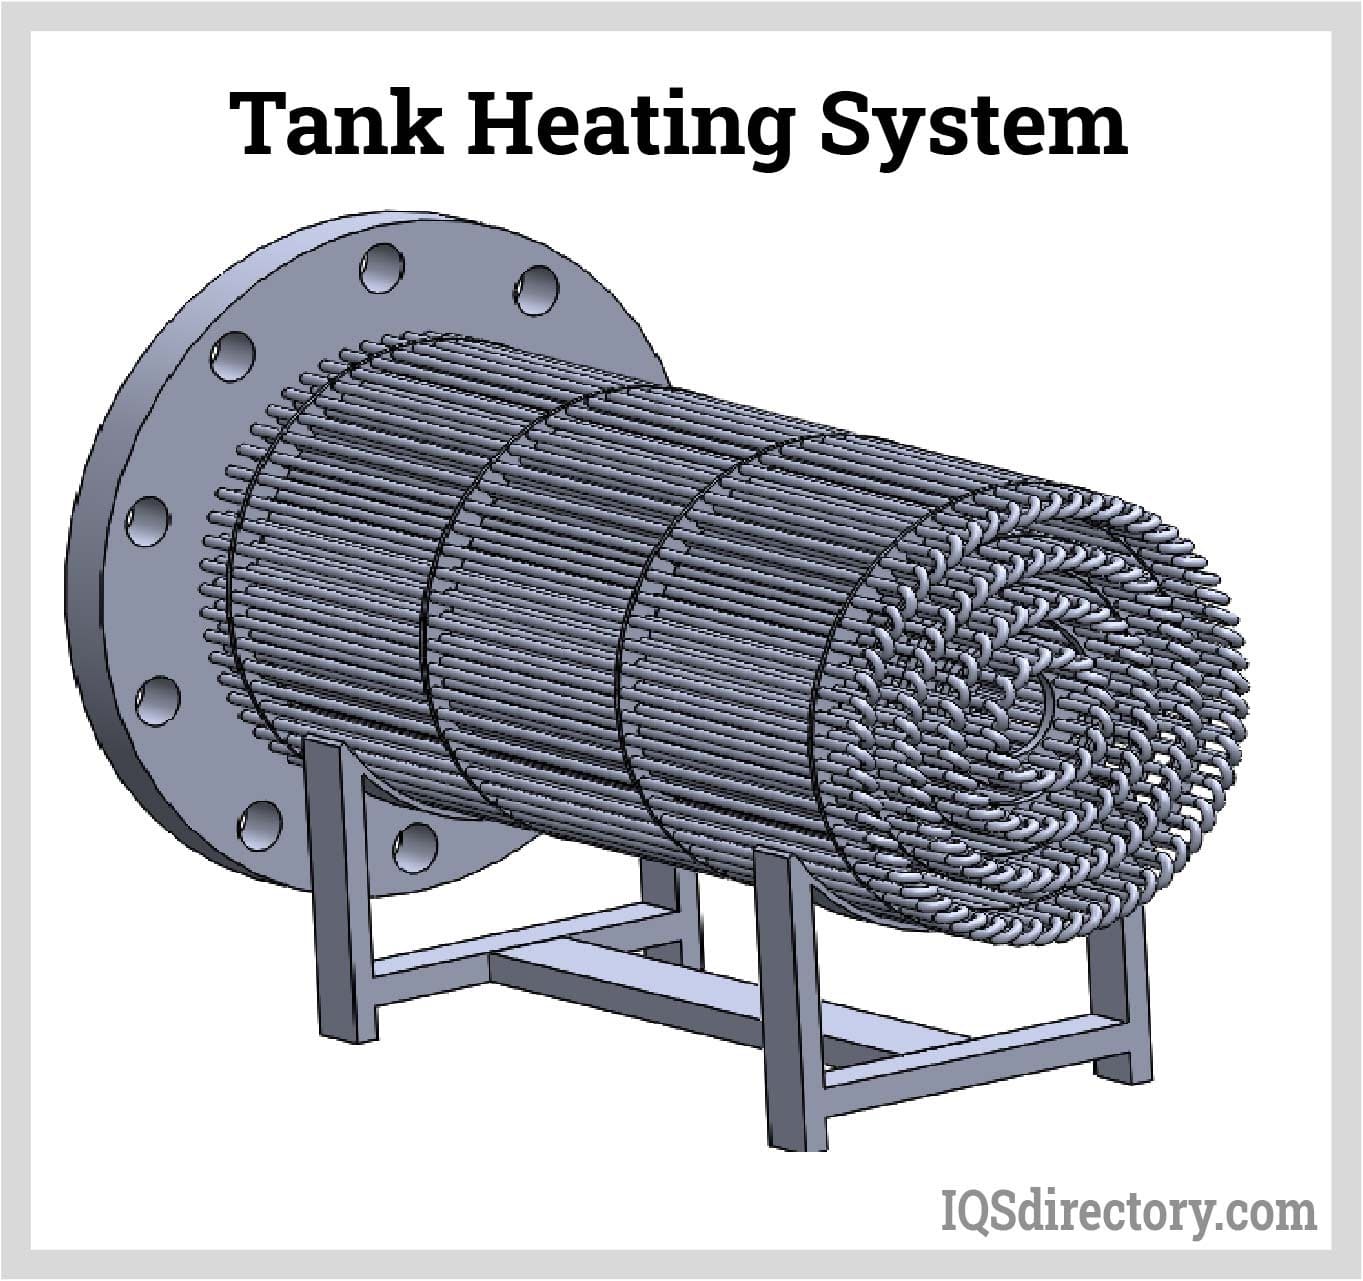 Tank Heating System